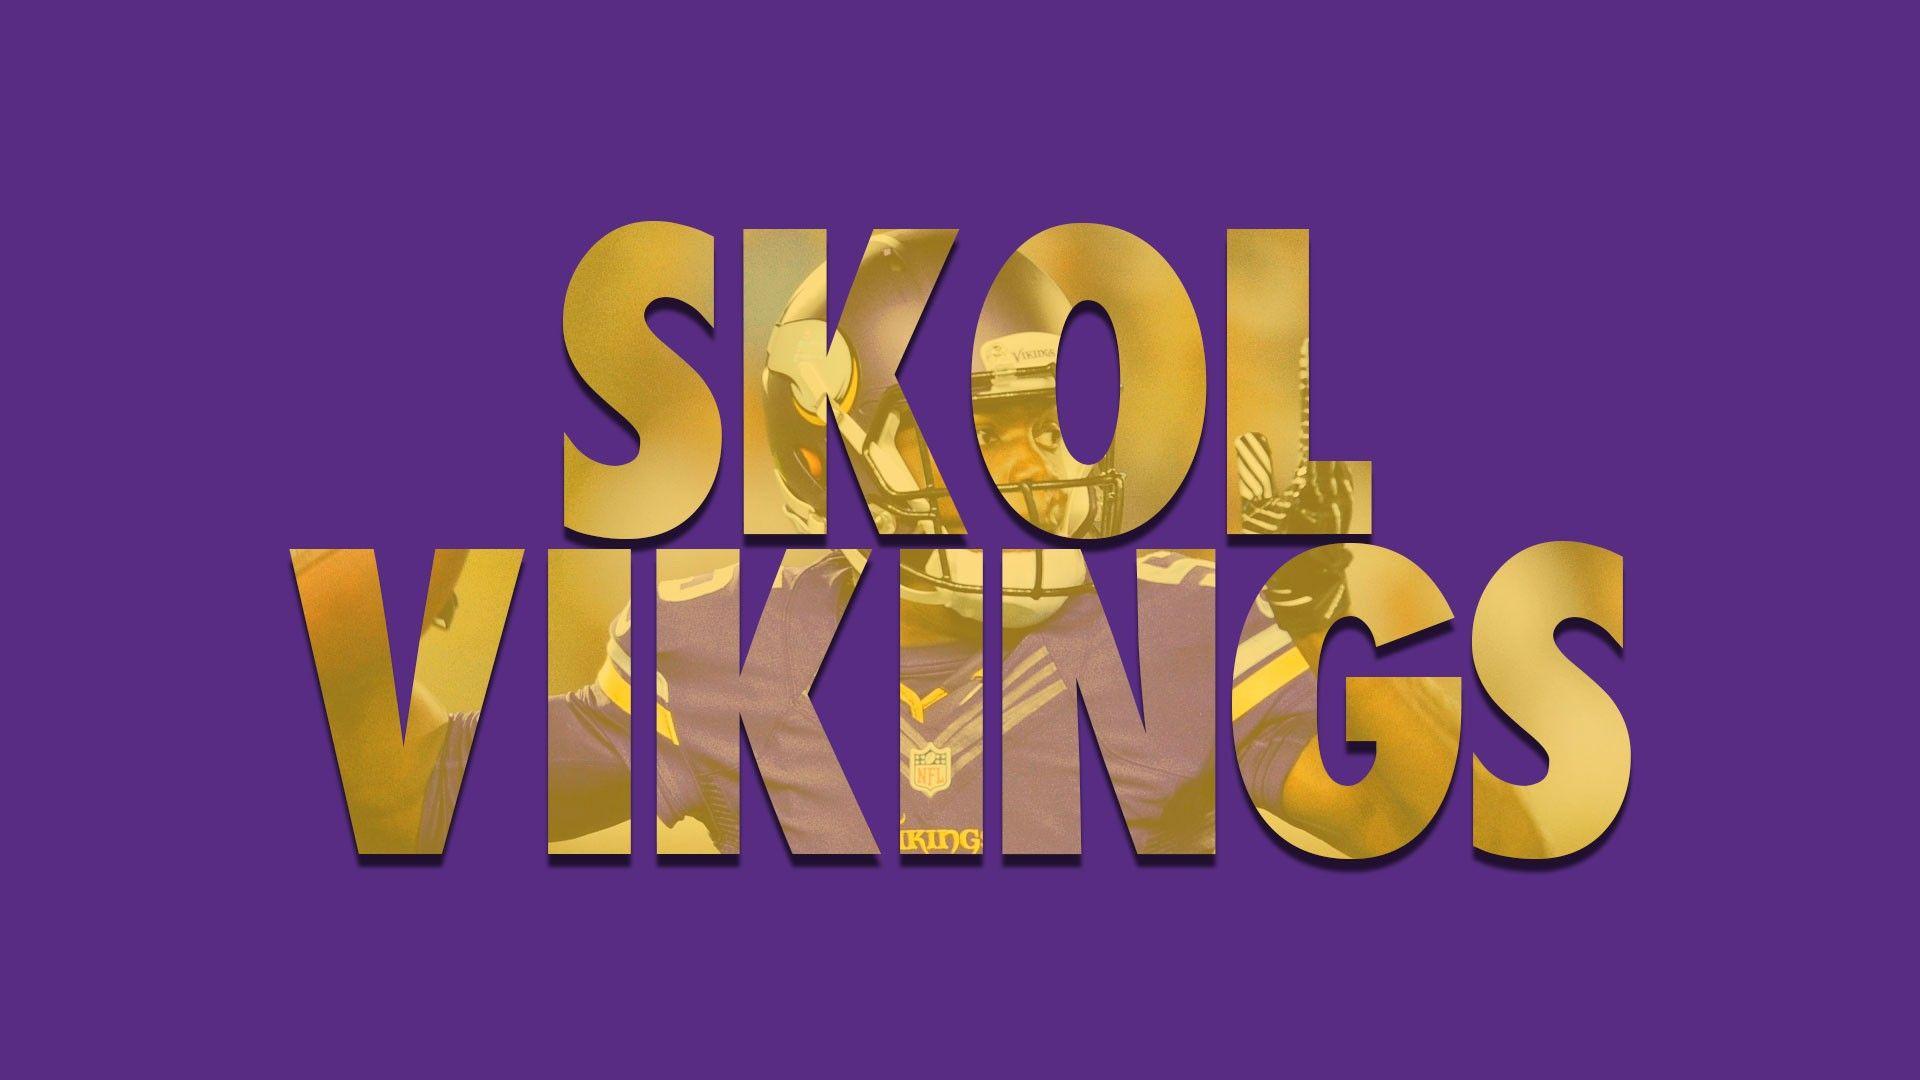 Minnesota Vikings Wallpapers Top Free Minnesota Vikings Backgrounds